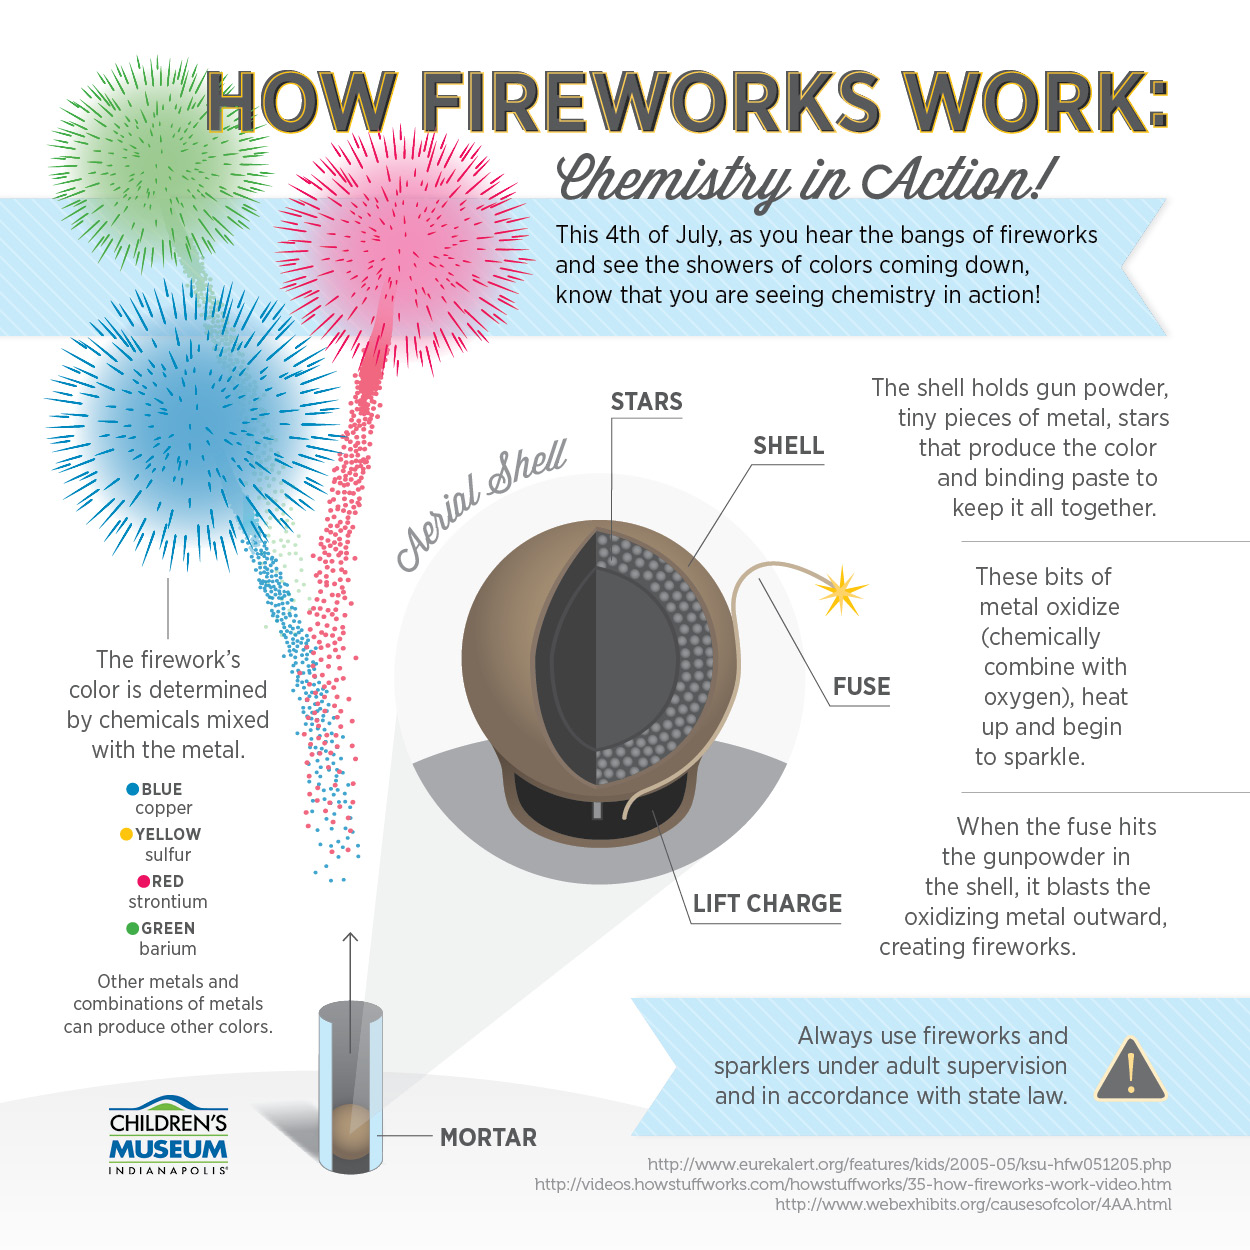 How Fireworks Work